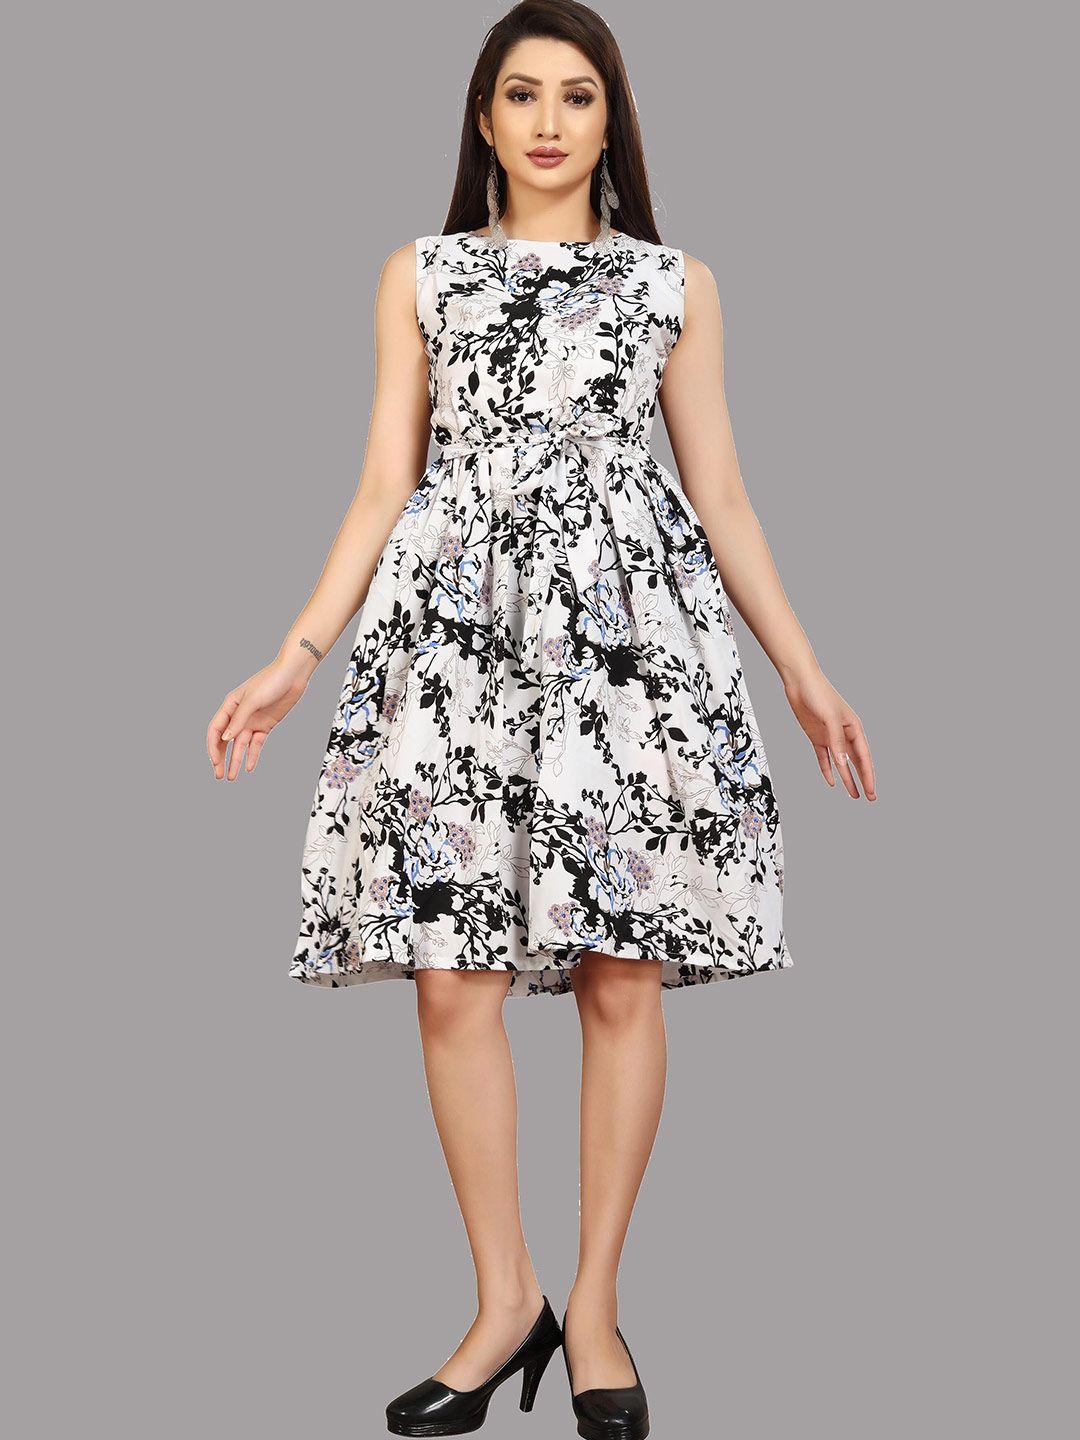 modli 20 fashion white & black floral printed crepe dress